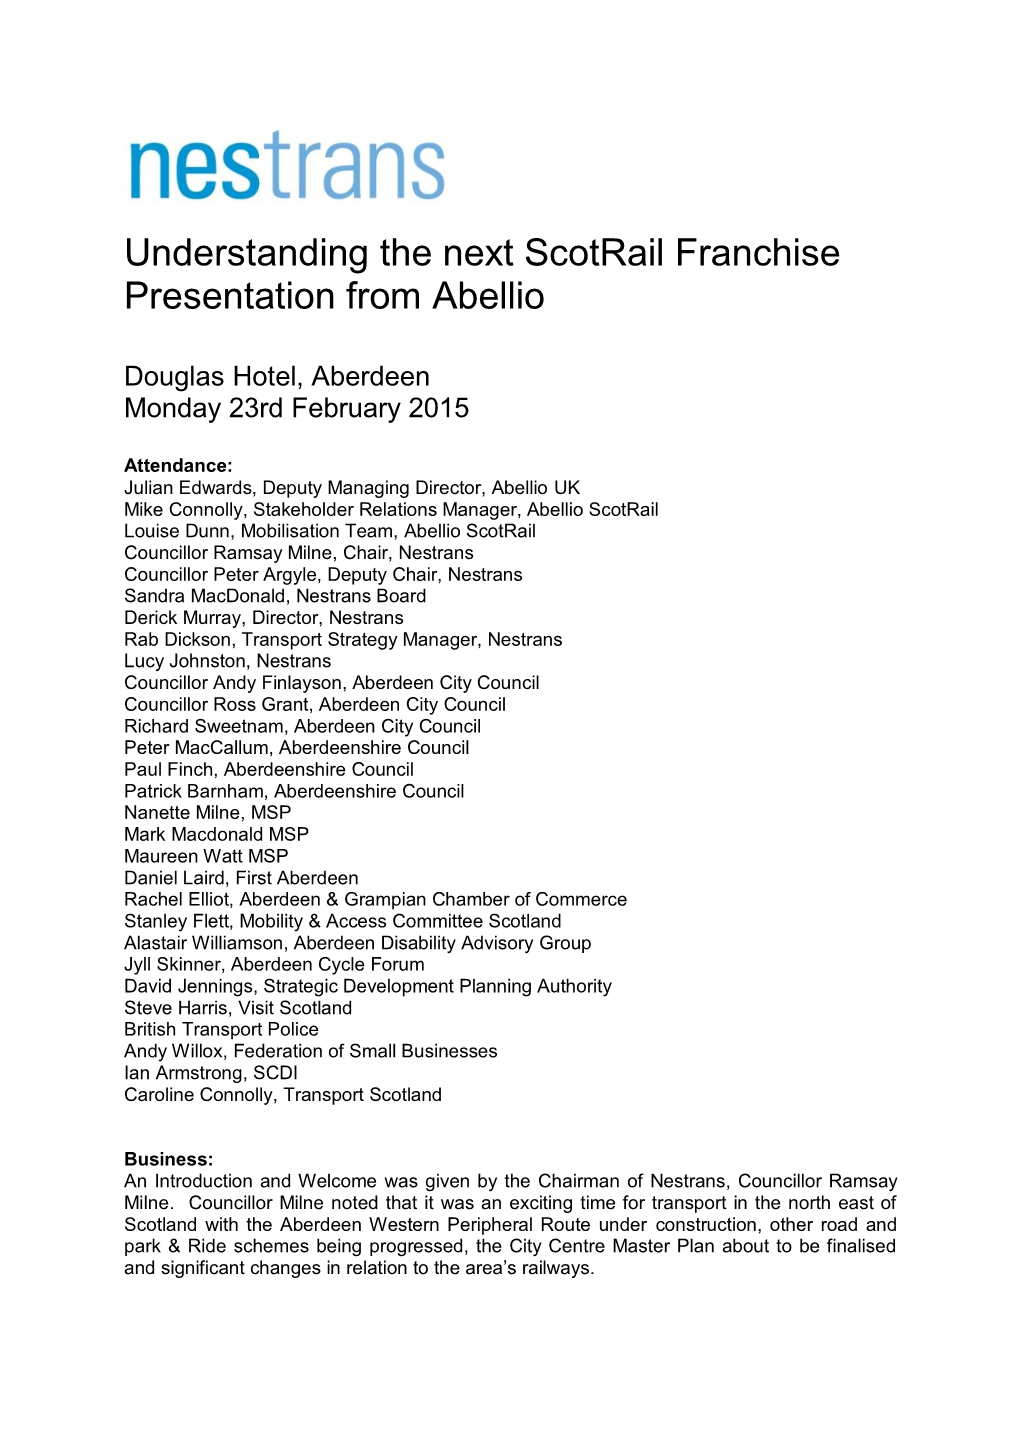 Understanding the Next Scotrail Franchise Presentation from Abellio